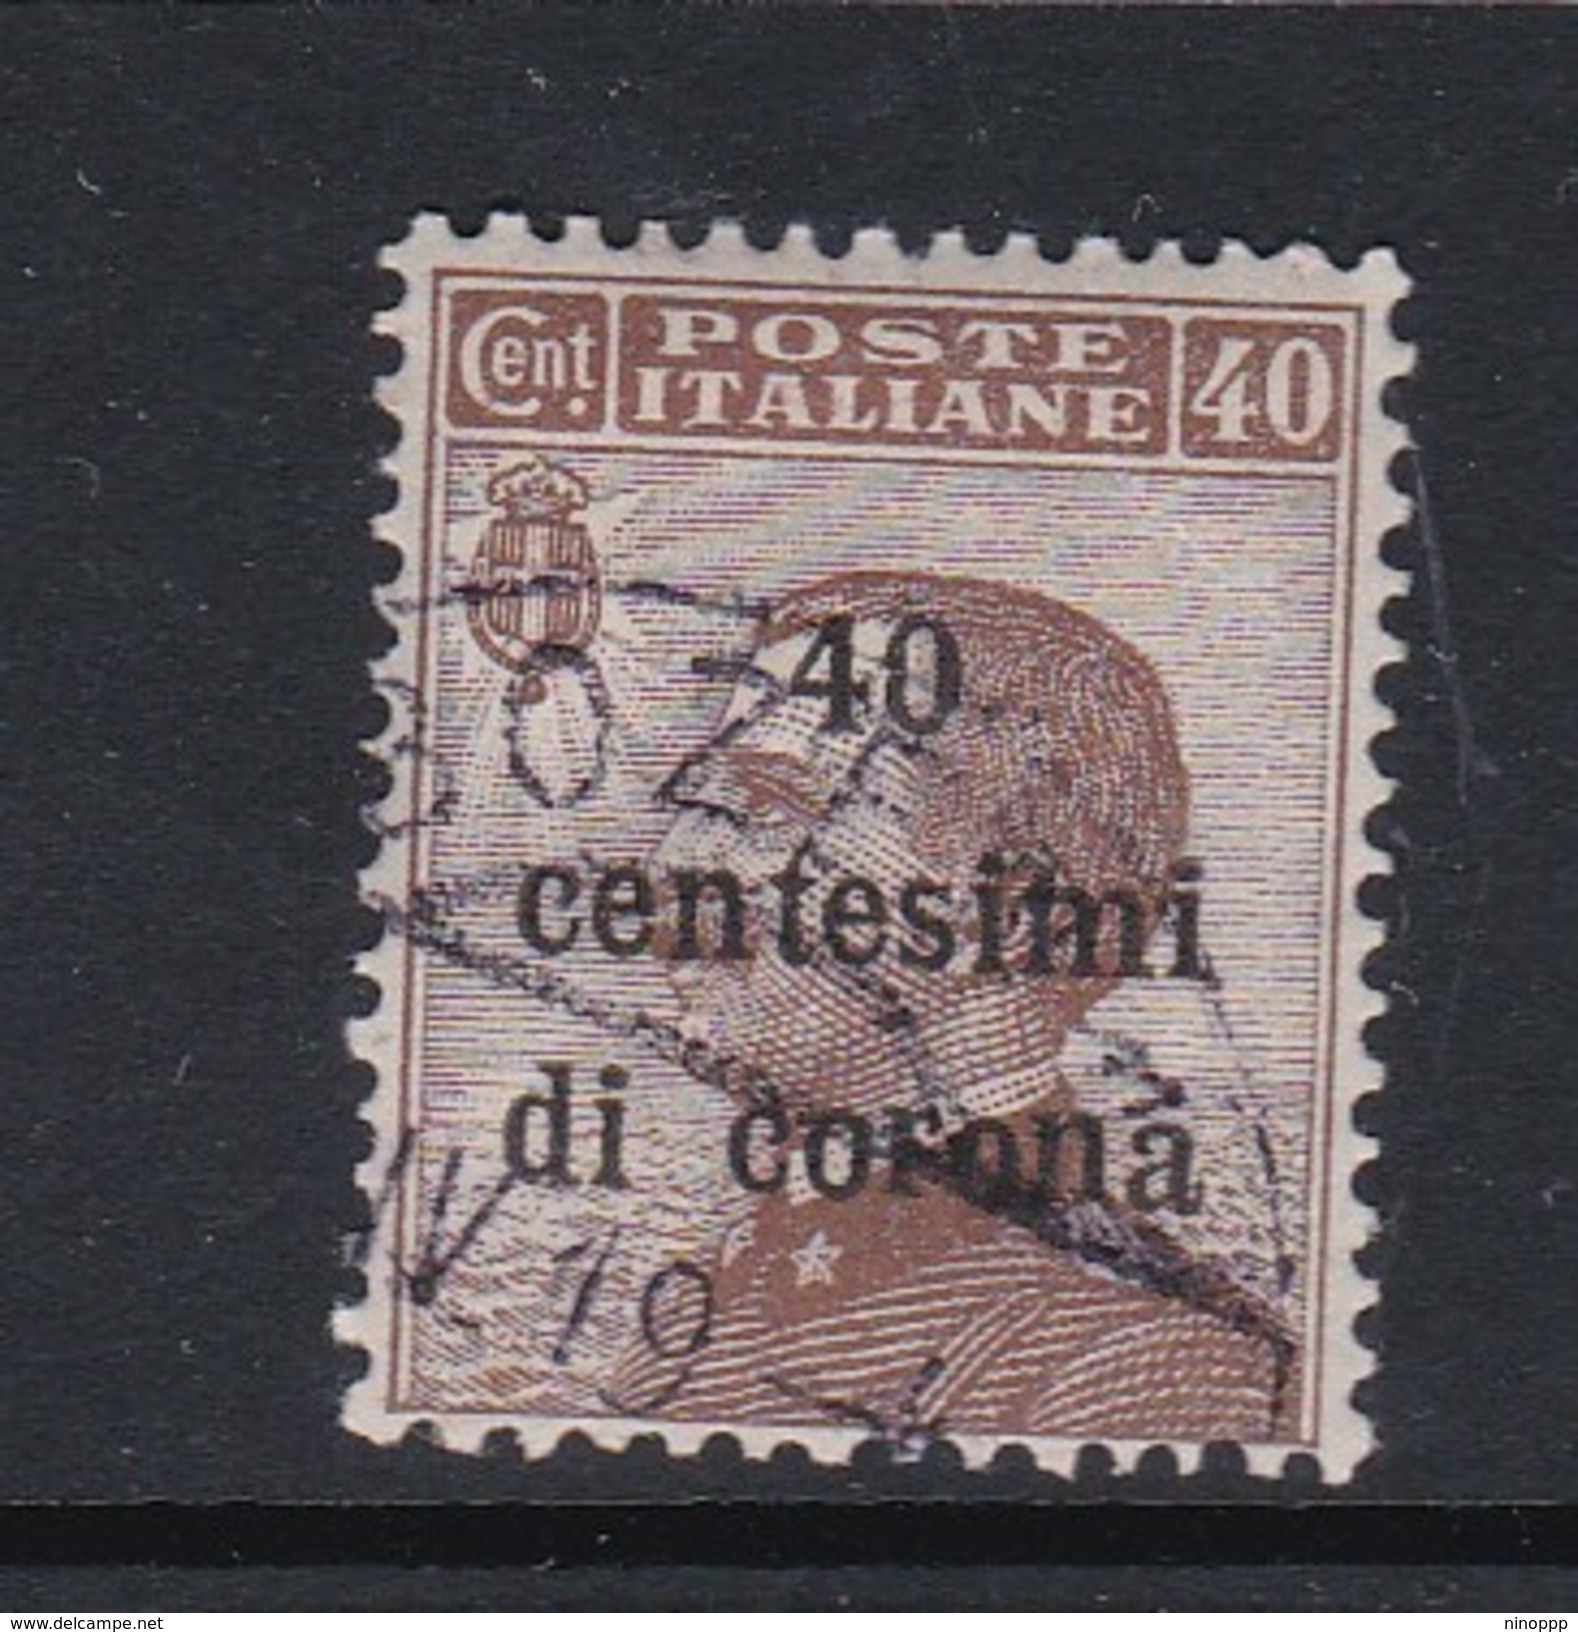 Venezia Giulia N70 1919 Italian Stamps Overprinted 40c On 40c Brown  Used - Austrian Occupation